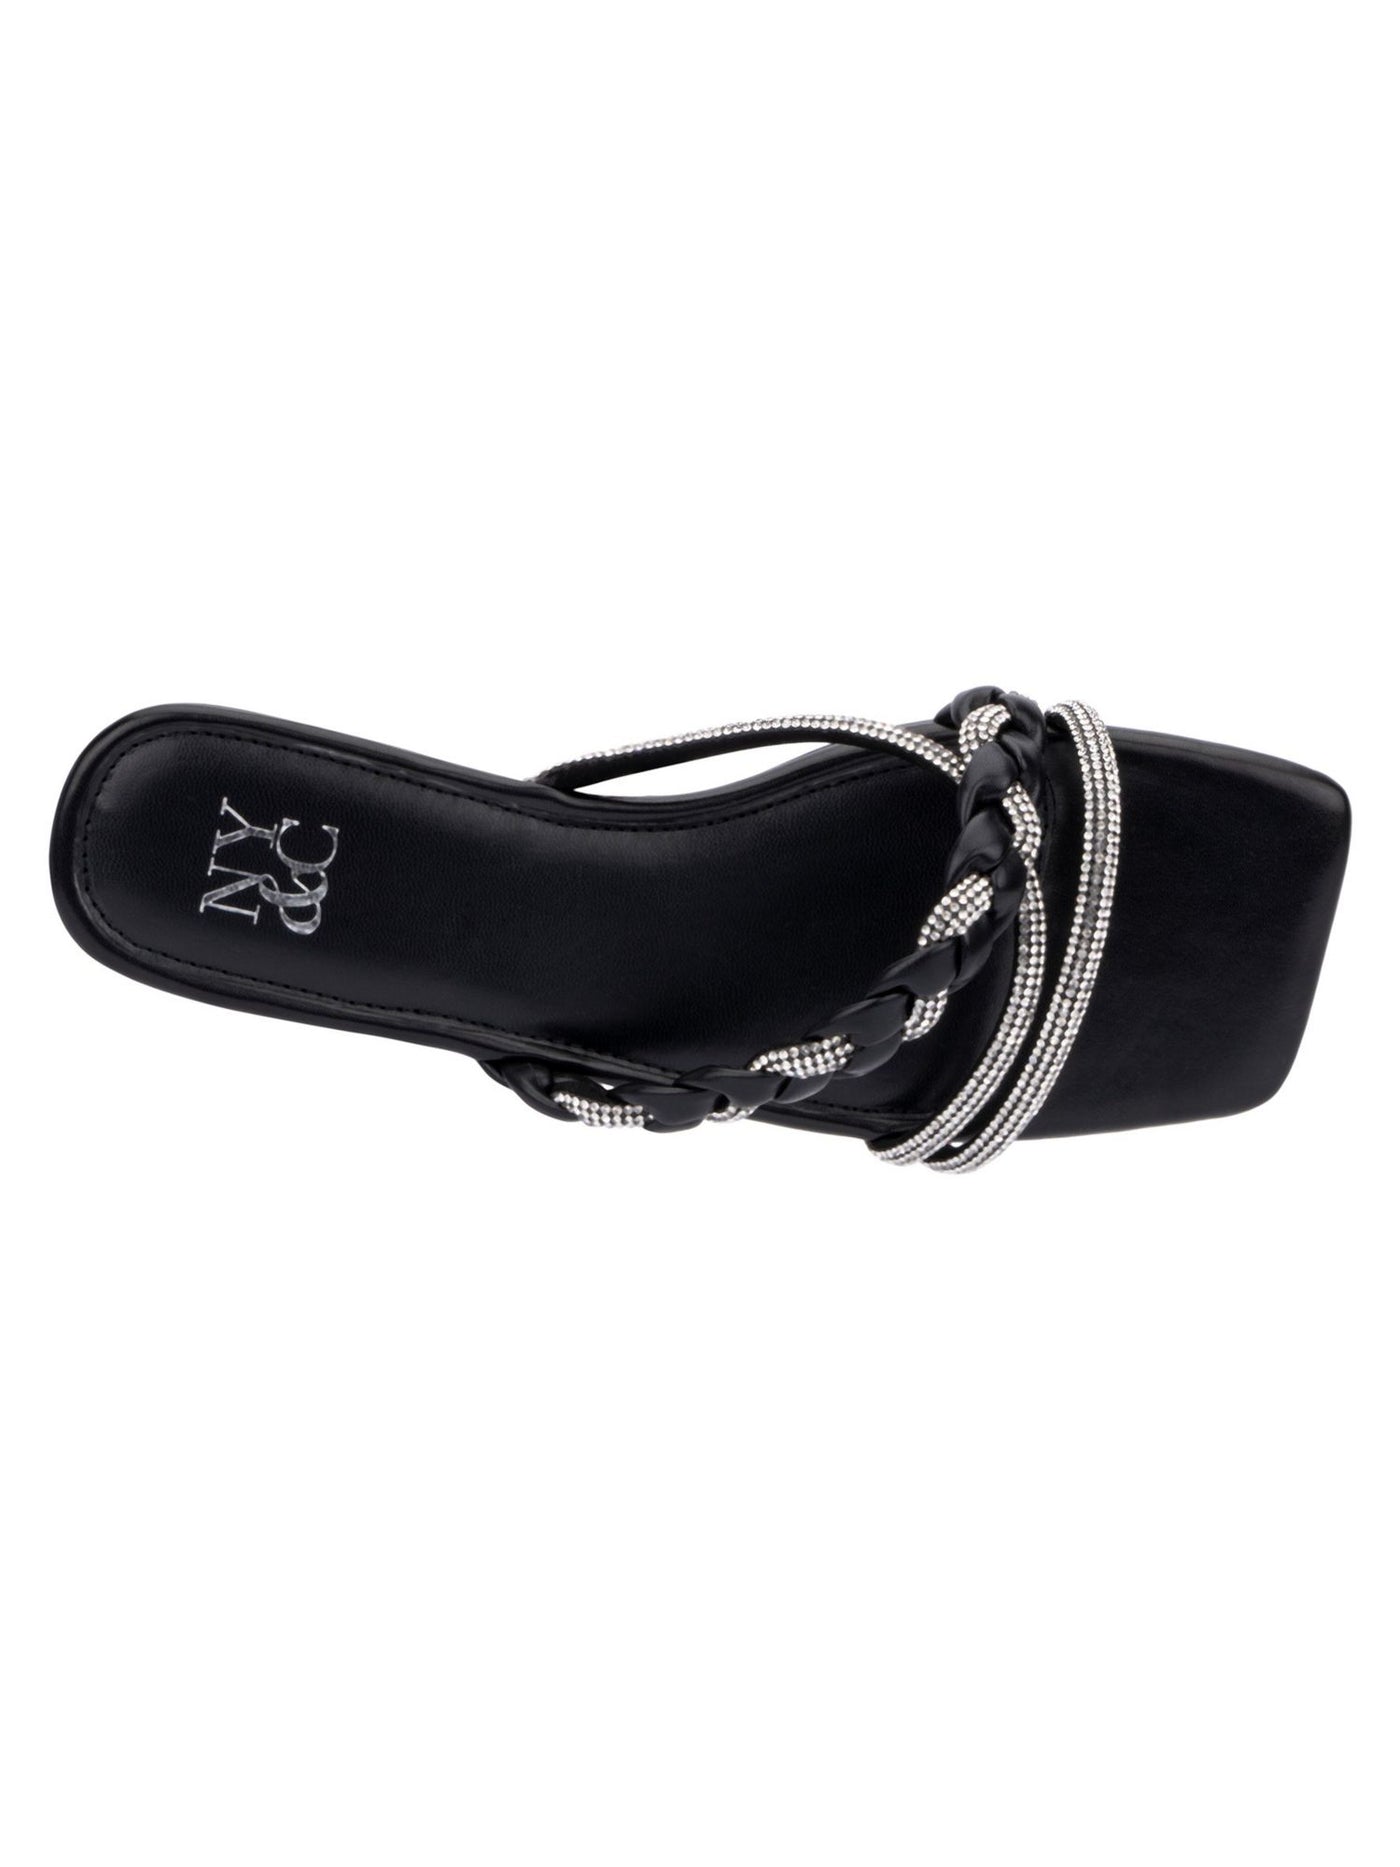 NEW YORK & CO Womens Black Padded Braided Rhinestone Alessia Square Toe Block Heel Slip On Slide Sandals Shoes 7.5